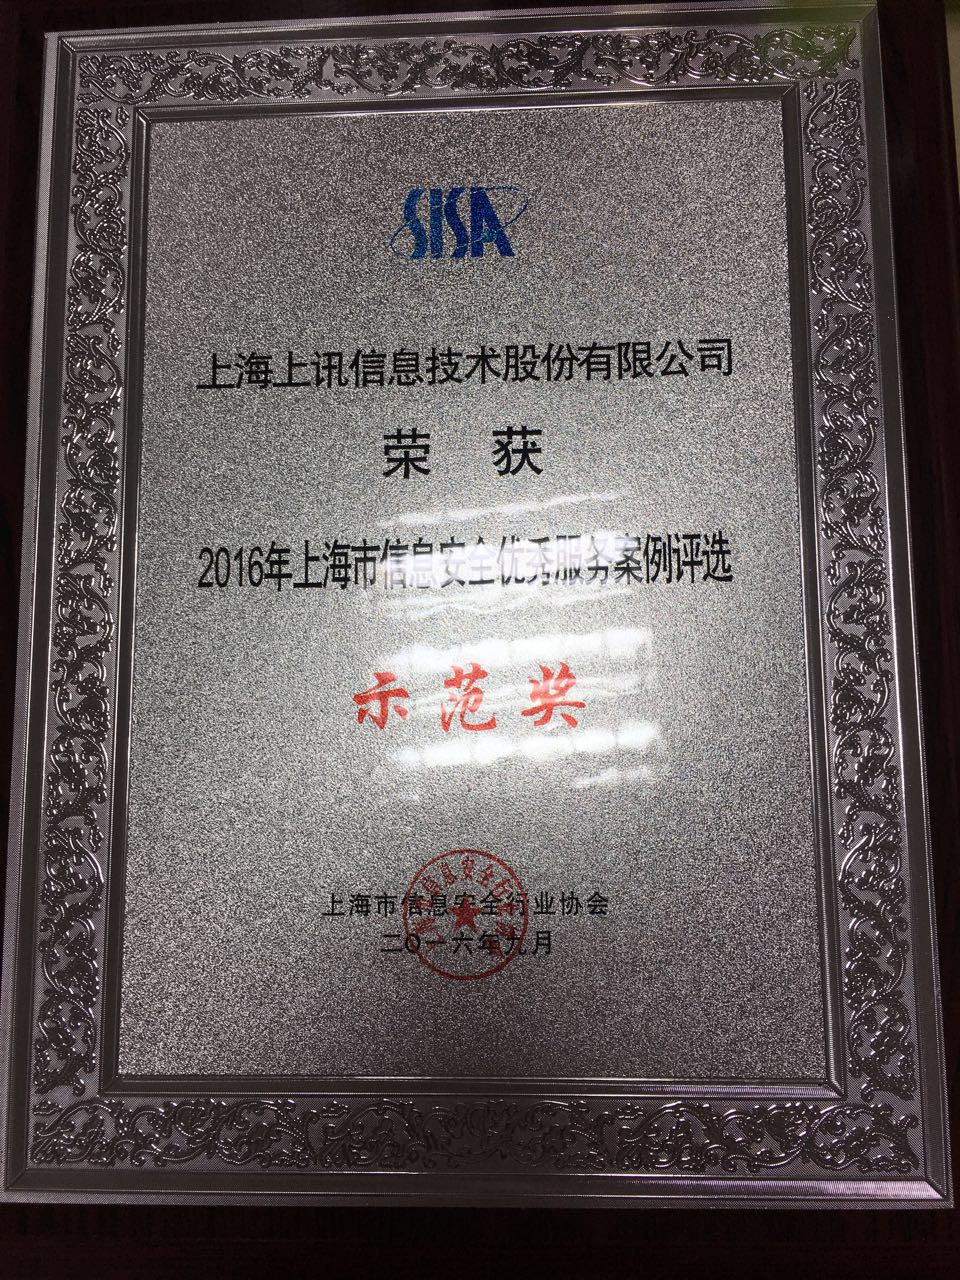 Shanghai Information Security Excellent Service Case Selection Demonstration Award